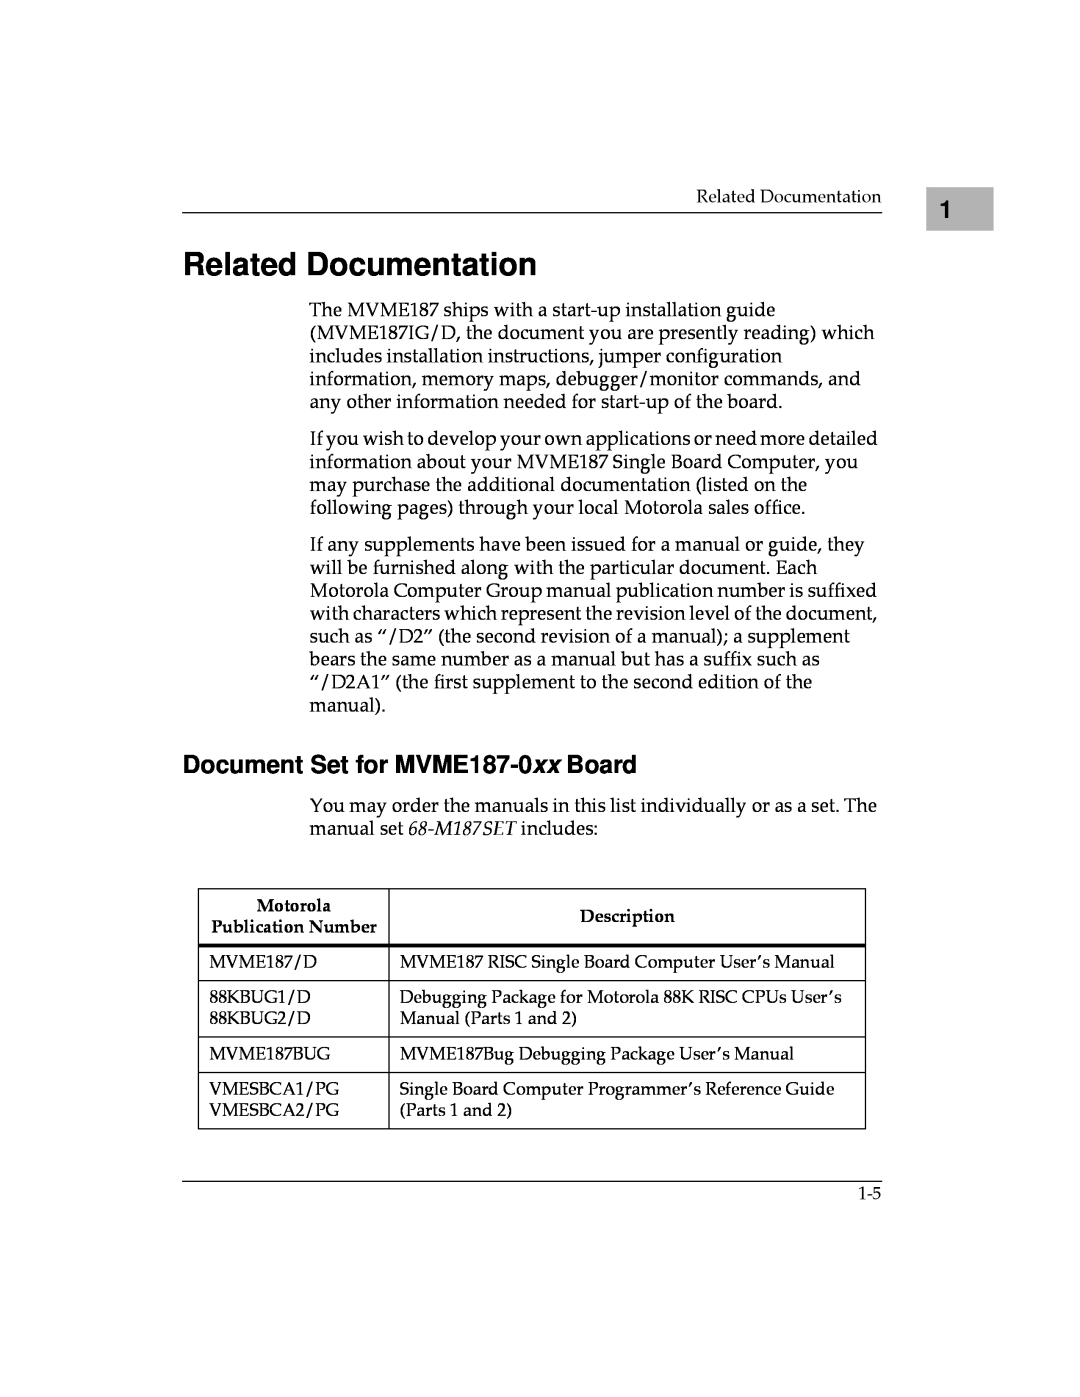 Motorola manual Related Documentation, Document Set for MVME187-0xx Board 